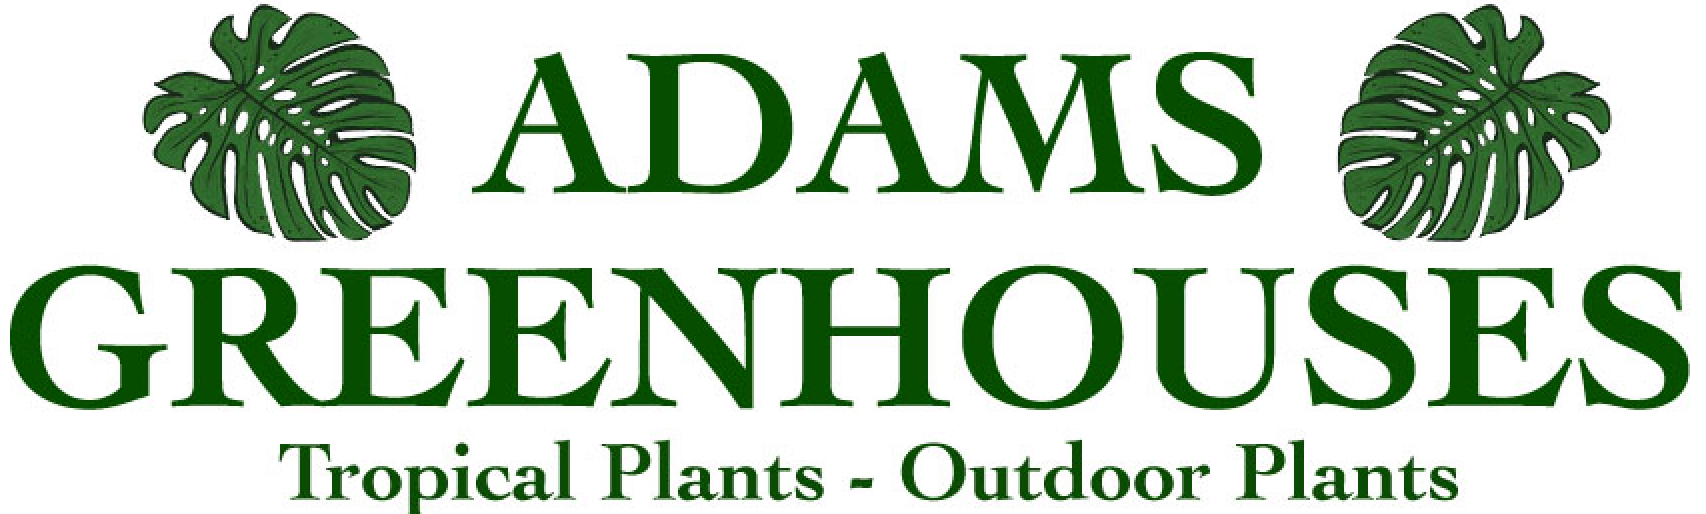 Adams Greenhouses